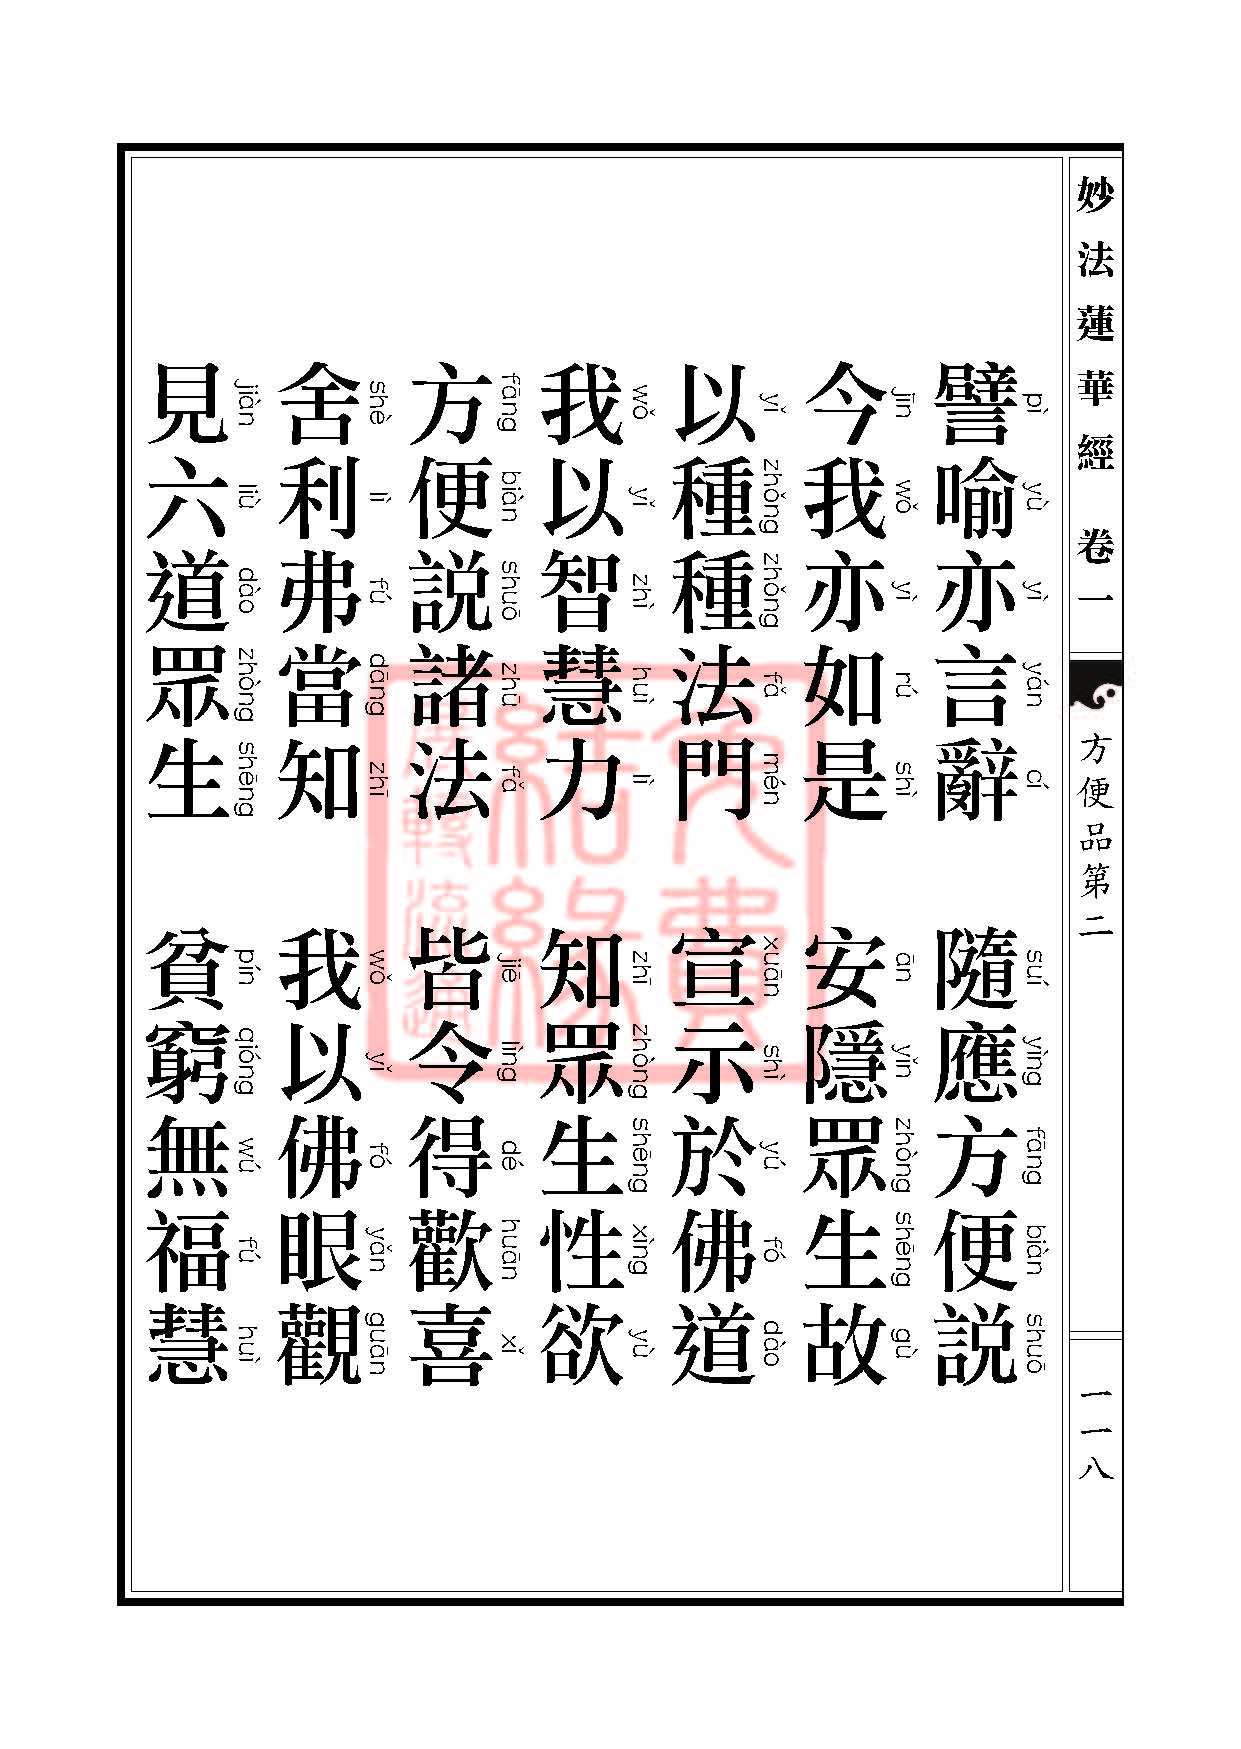 Book_FHJ_HK-A6-PY_Web_页面_118.jpg